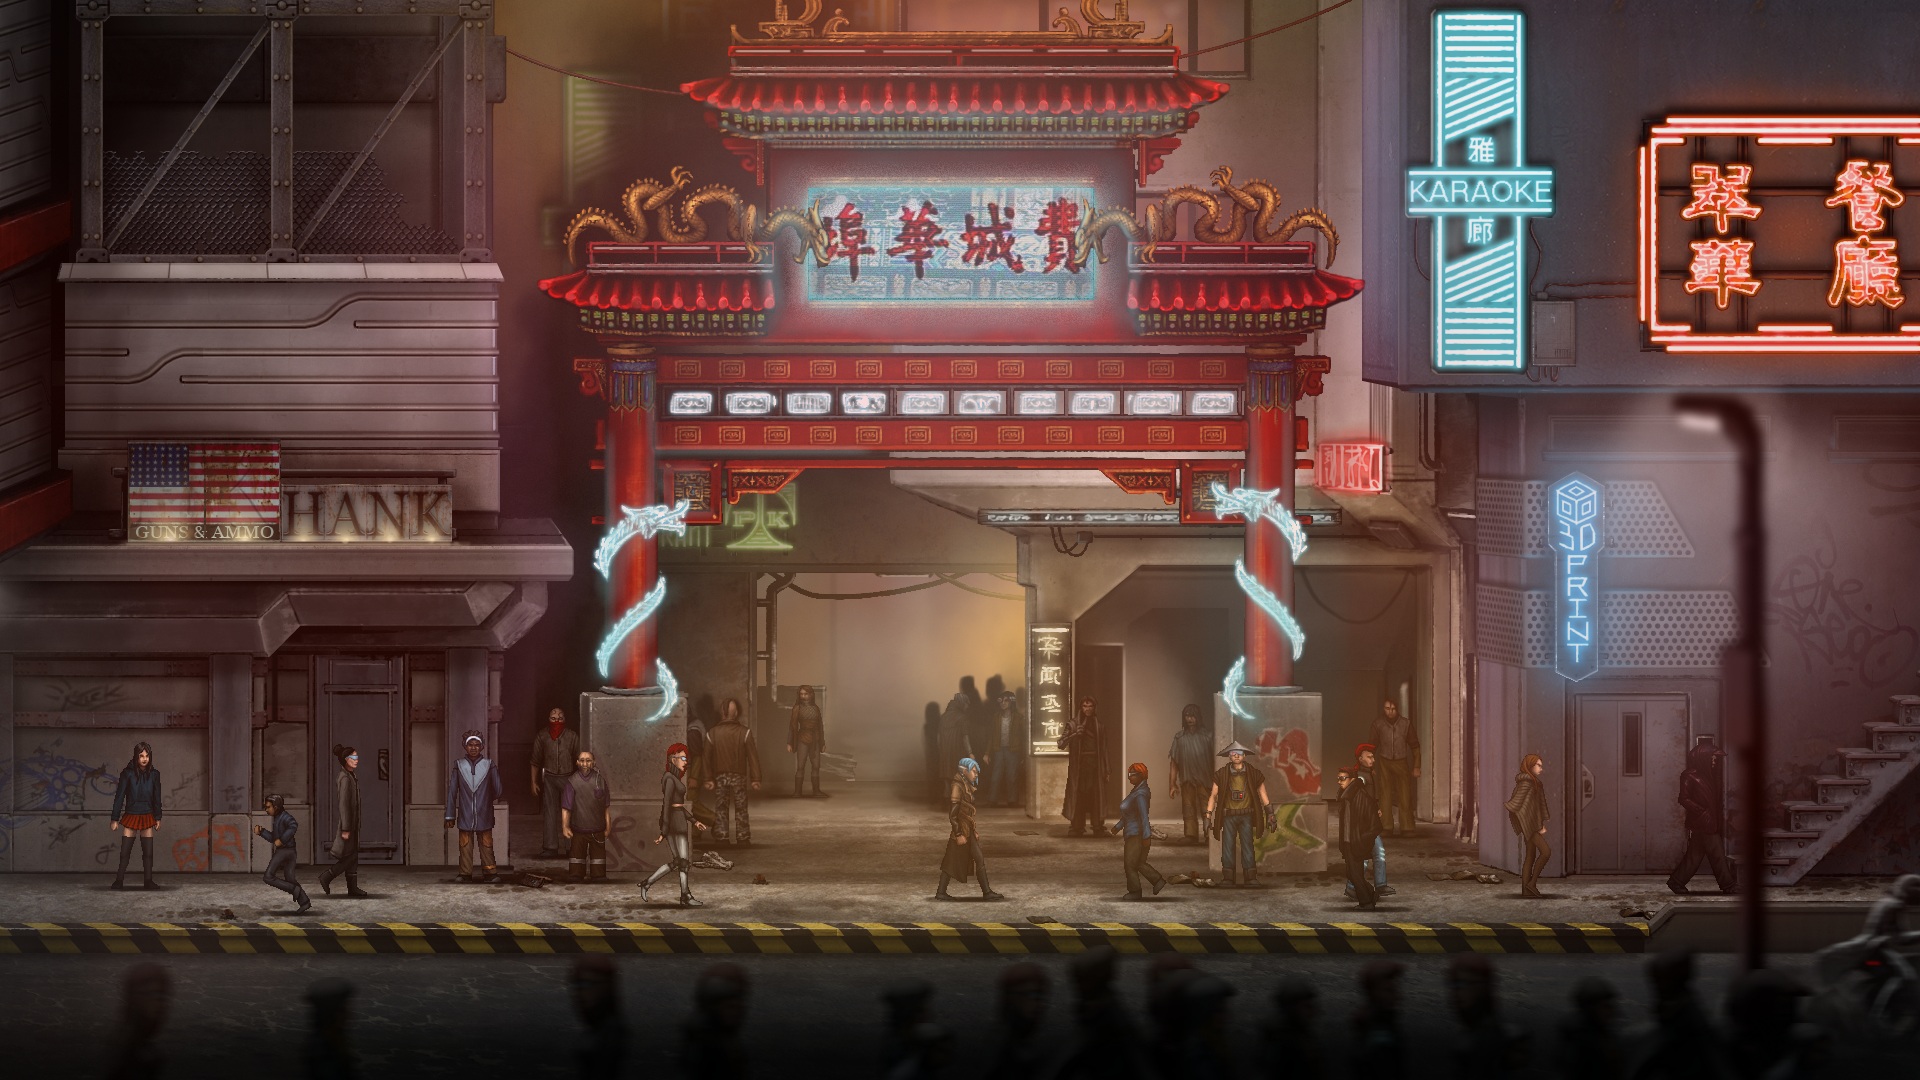 General 1920x1080 digital art fantasy art Asian architecture neon street city people video games RPG kanji